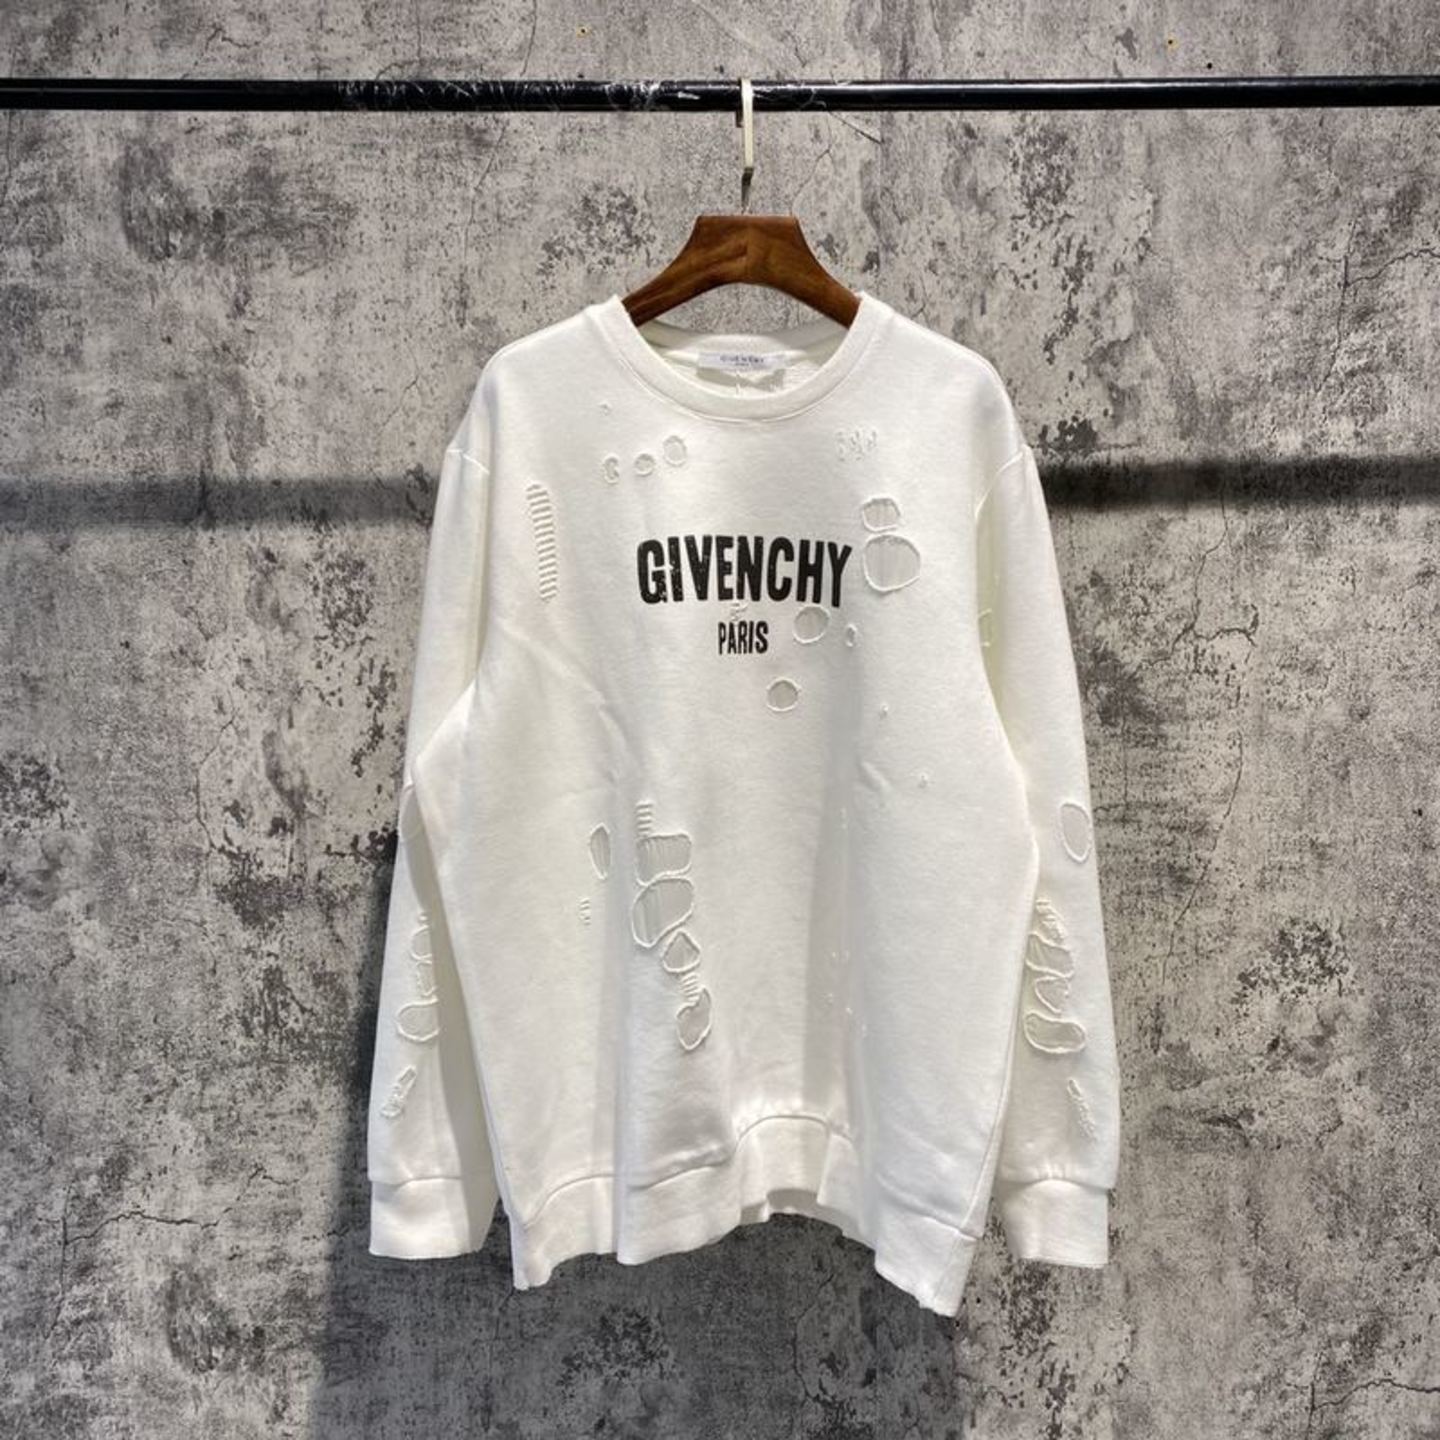 Givenchy Paris destroyed sweatshirt